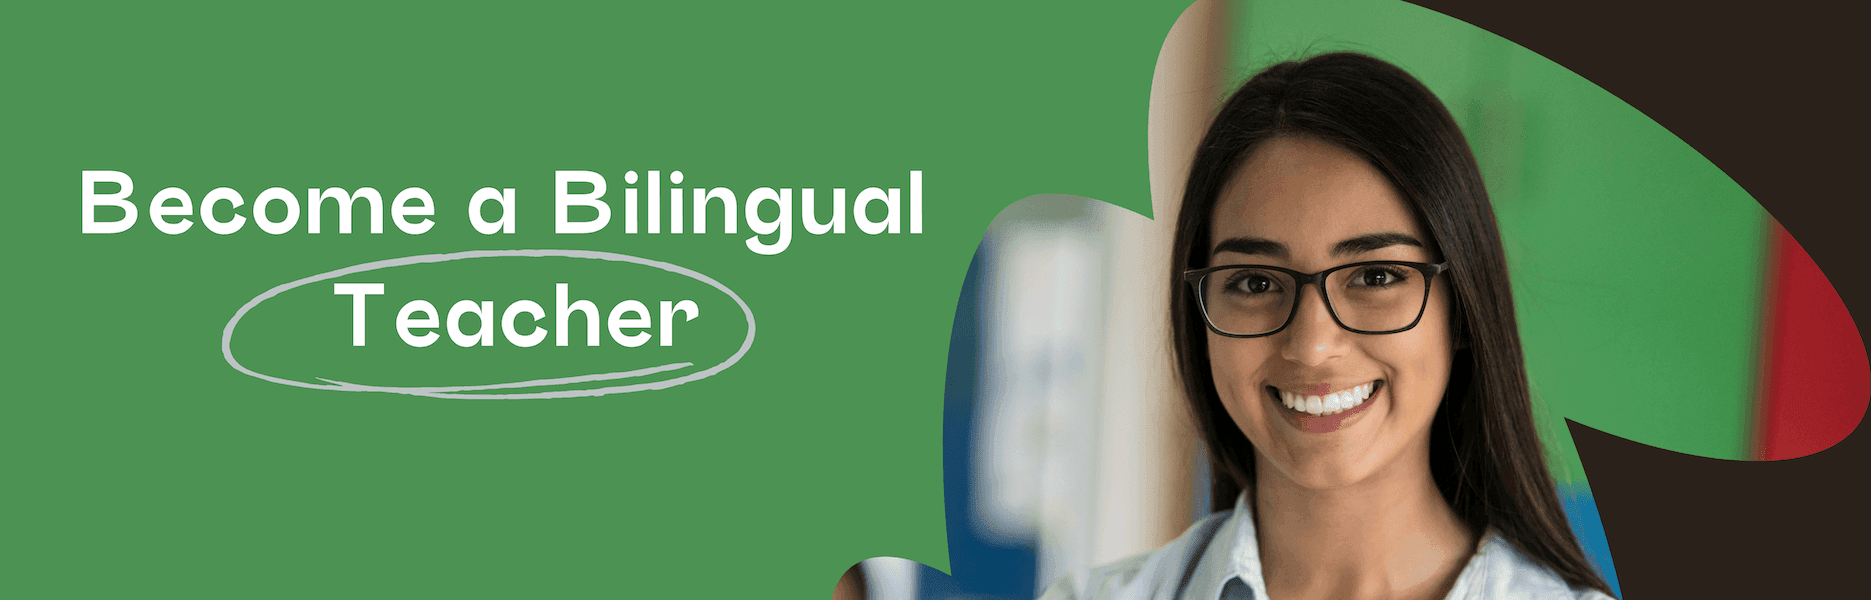 Bilingual teacher standing in a classroom